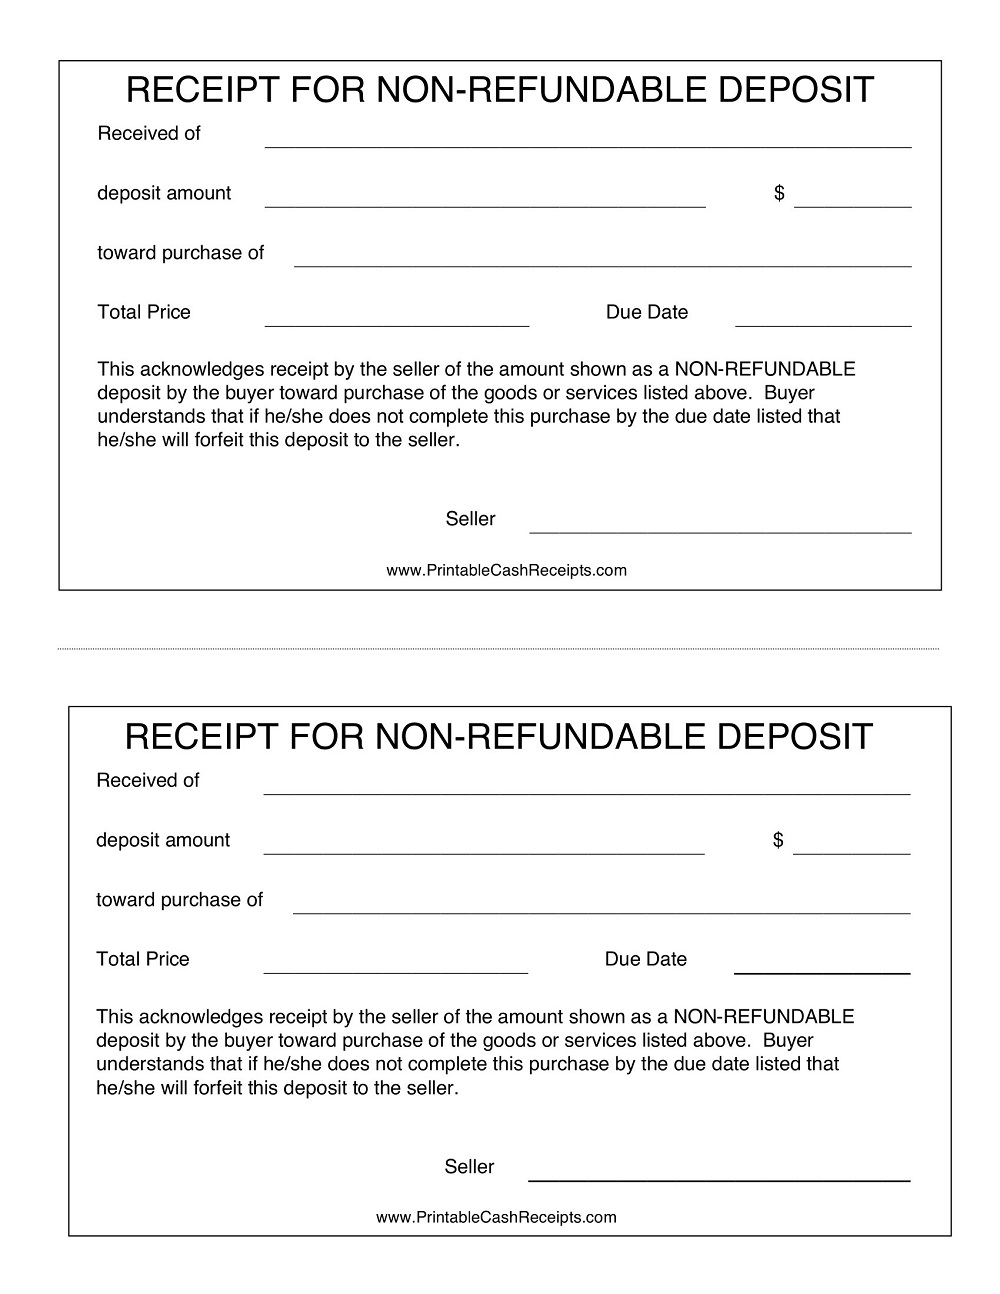 Non-refundable Deposit Receipt